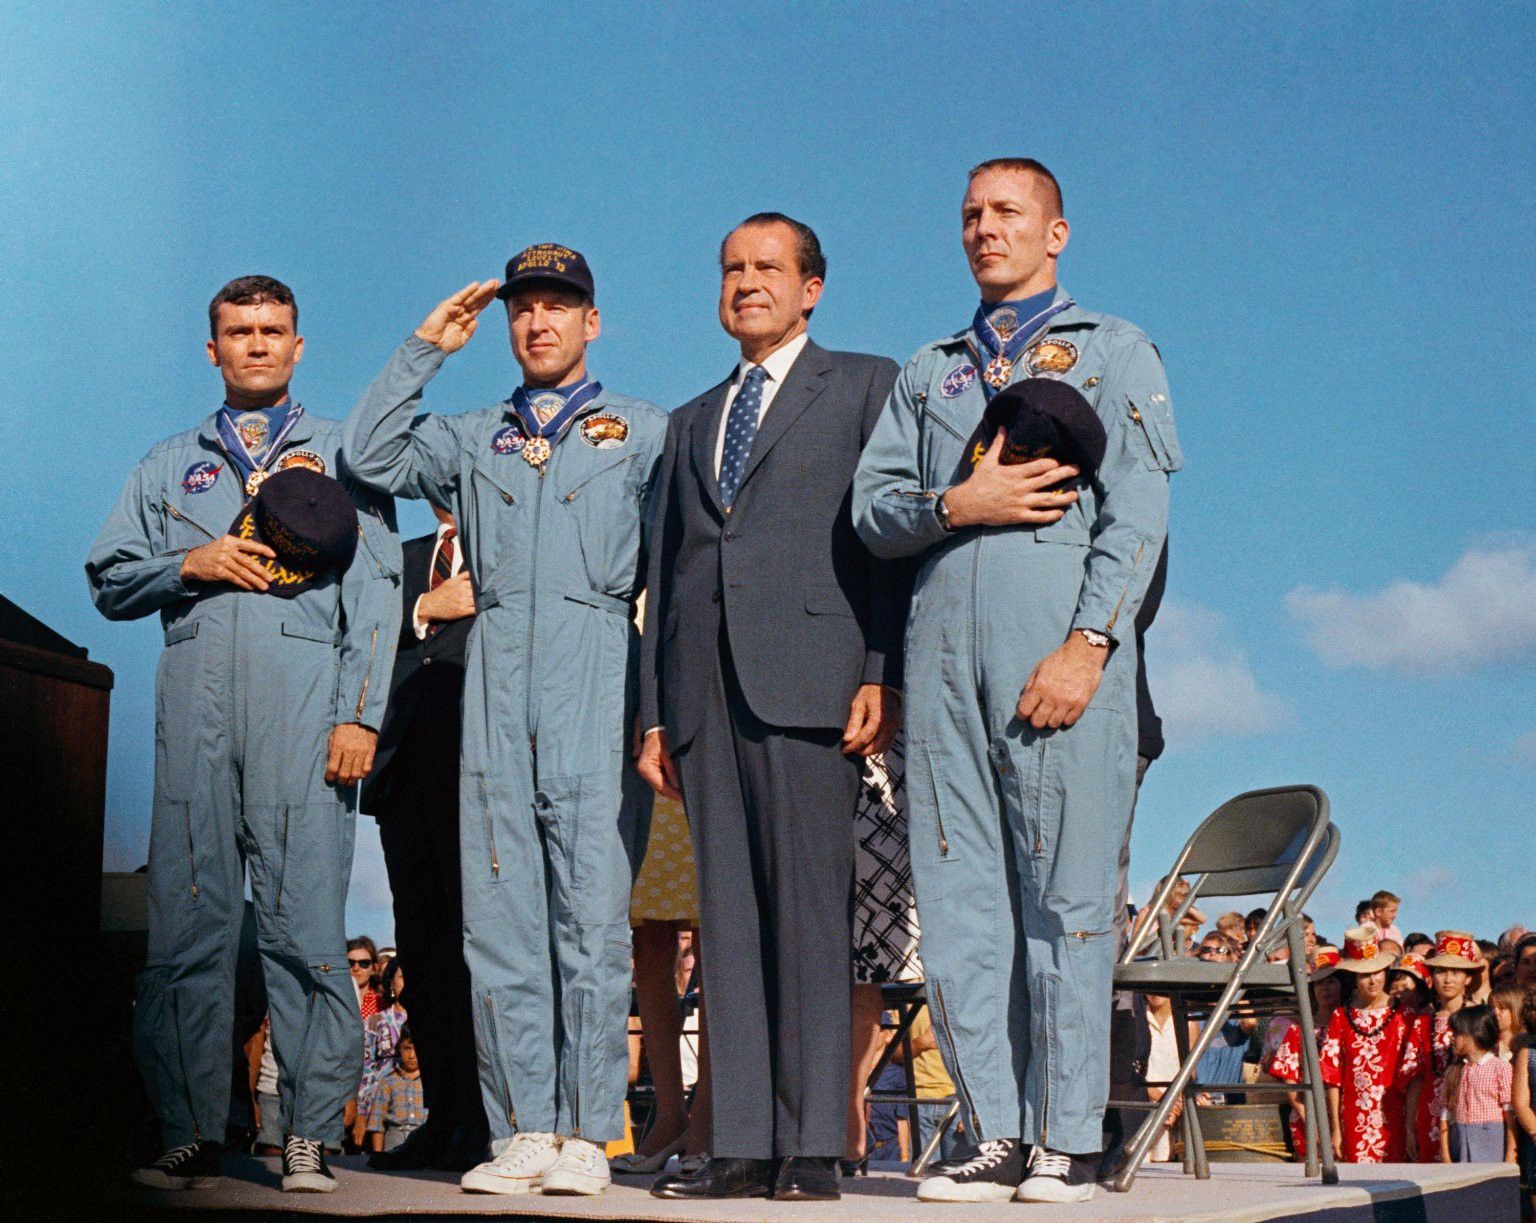 Apollo 13 crew with President Nixon after landing